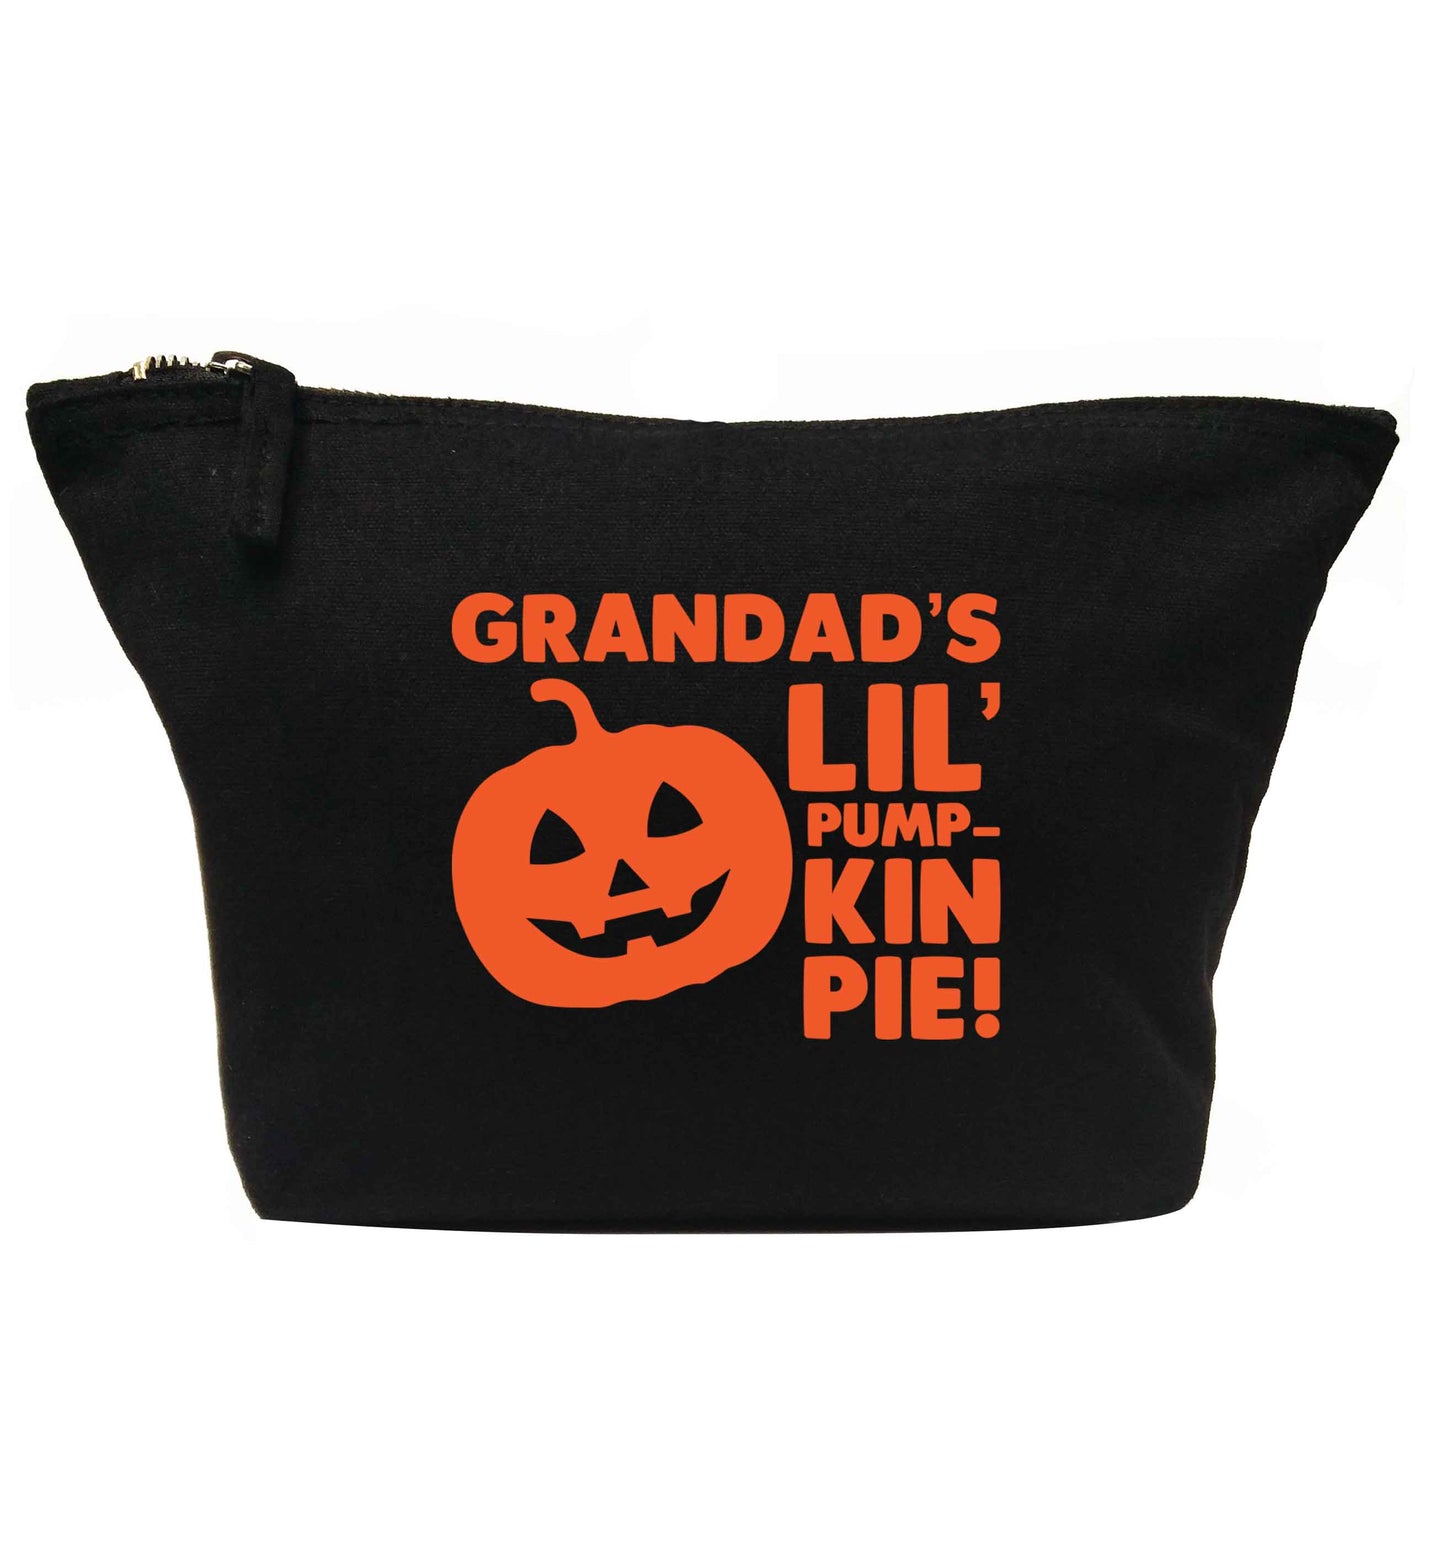 Grandad's lil' pumpkin pie | Makeup / wash bag